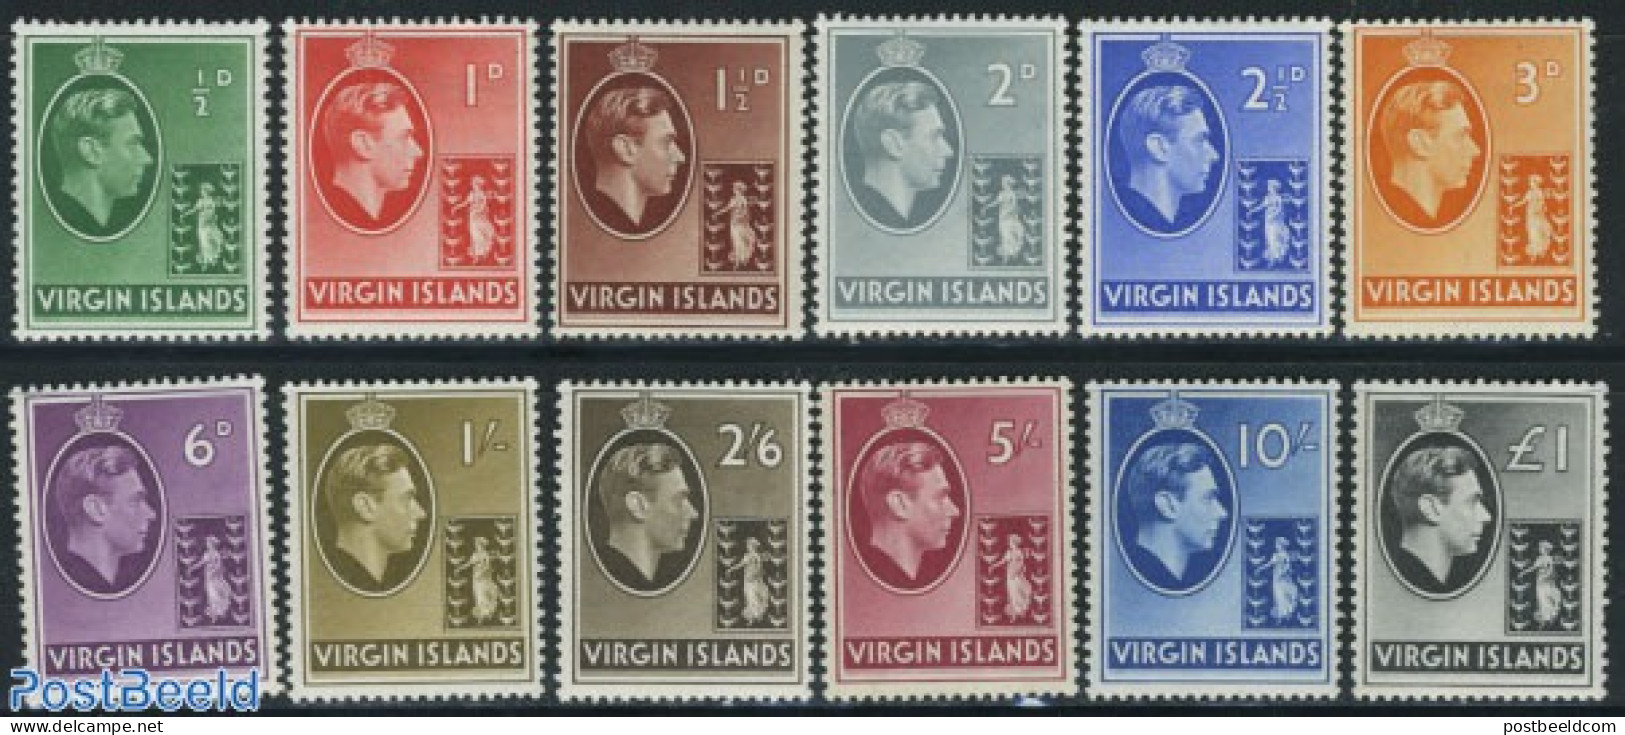 Virgin Islands 1938 Definitives 12v, Unused (hinged), History - Coat Of Arms - British Virgin Islands